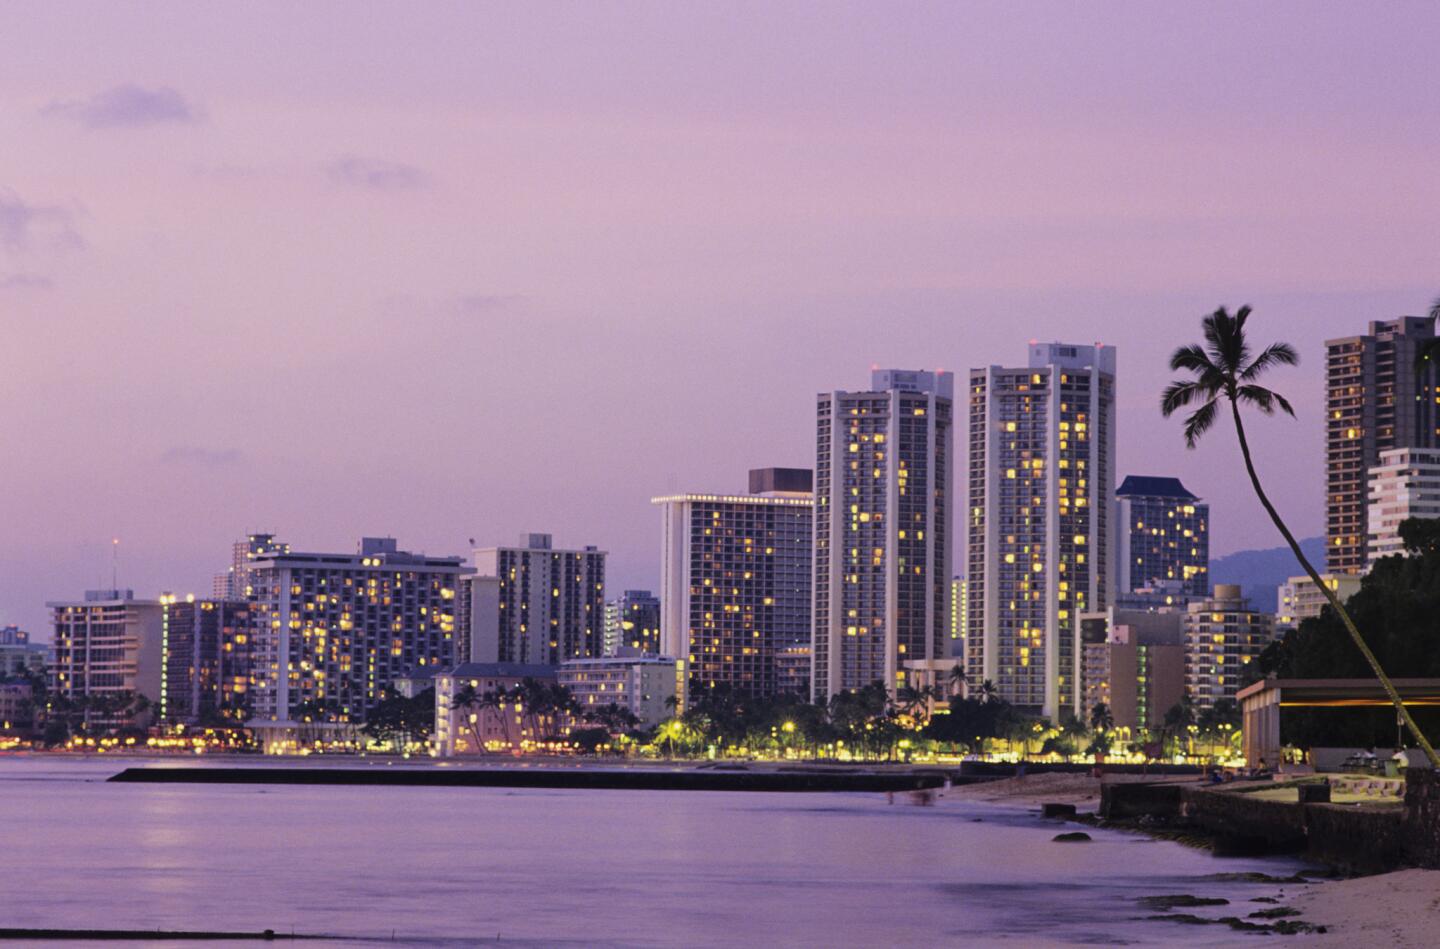 Honolulu, Waikiki hotels at dusk.